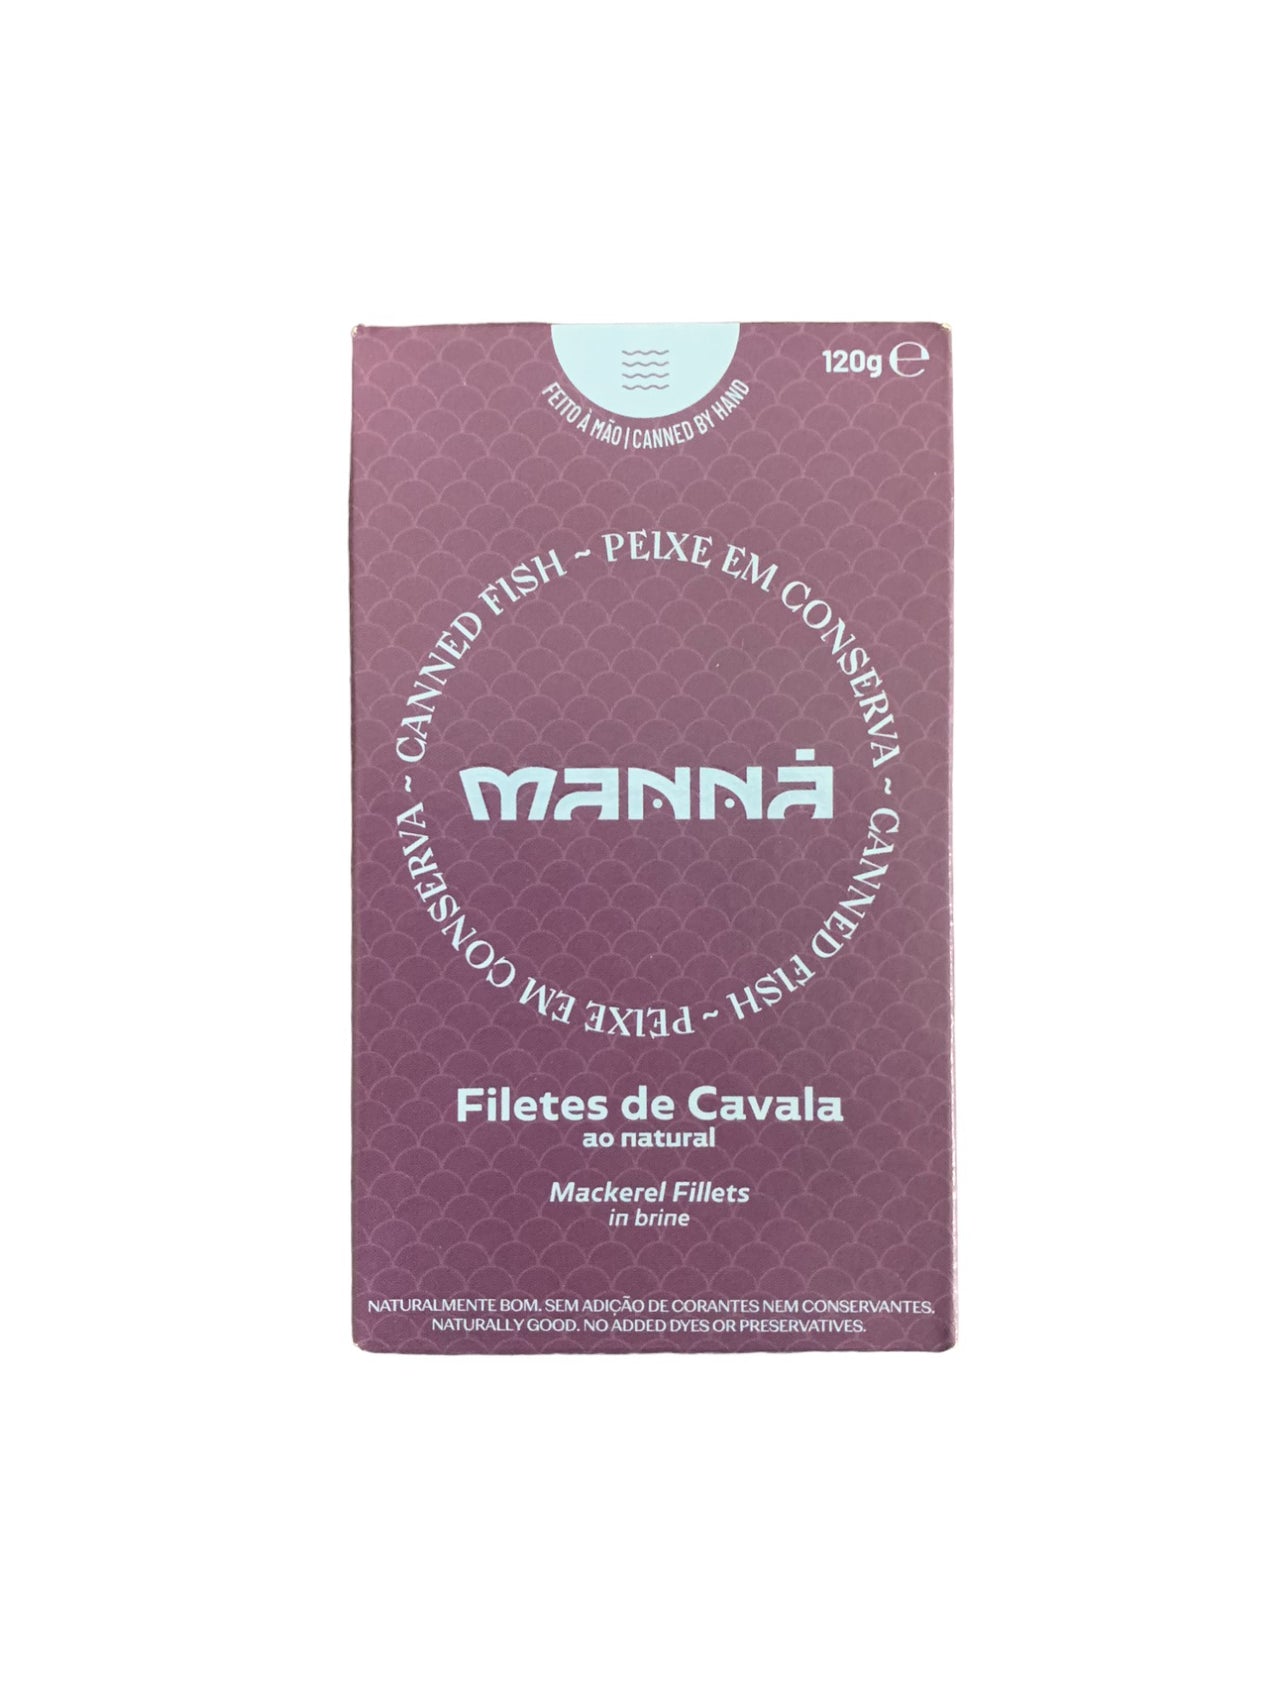 Manná Mackerel Fillets in Brine - 6 Pack